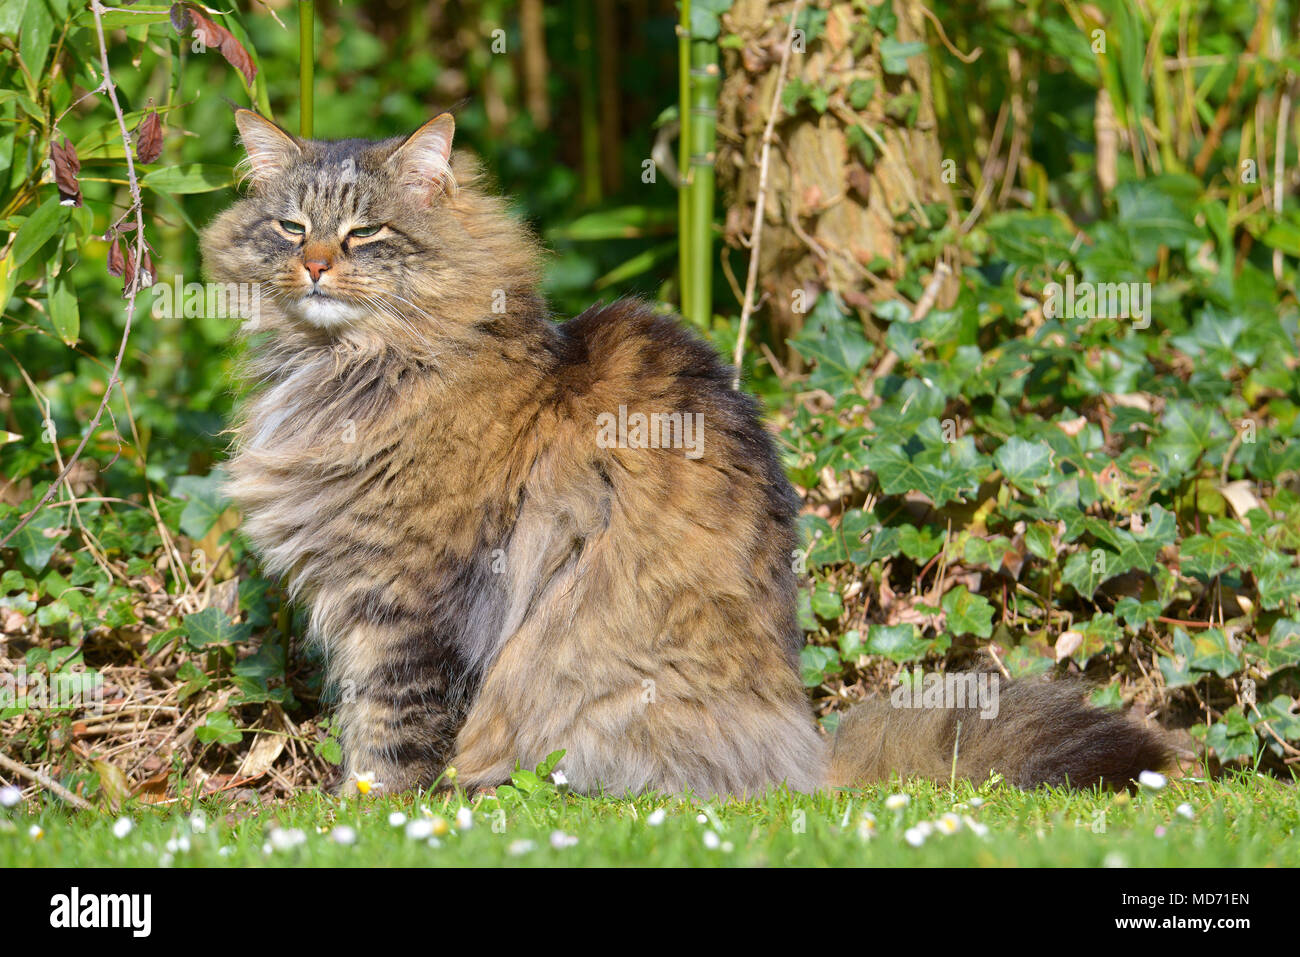 Angora cat (Felis catus) sitting on grass among ivy Stock Photo